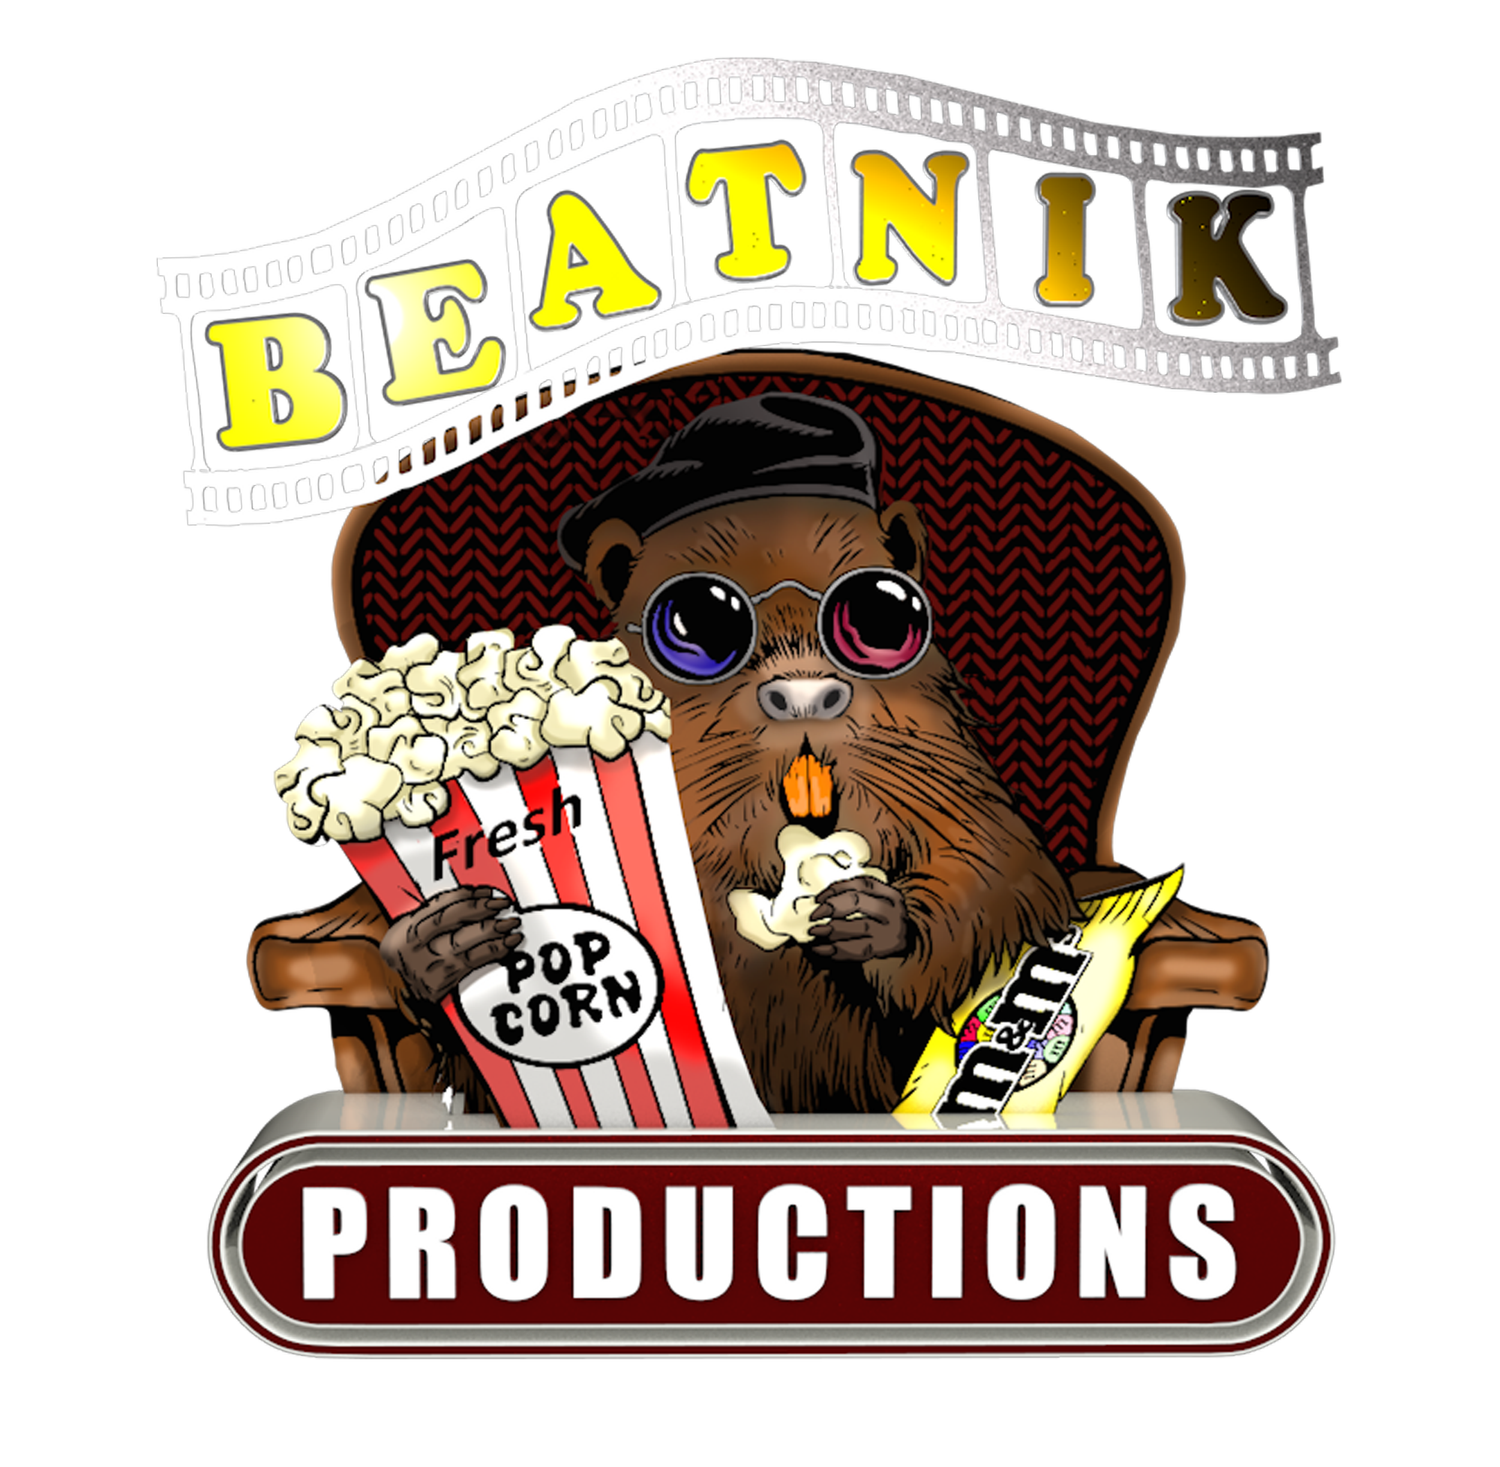 Beatnik Productions